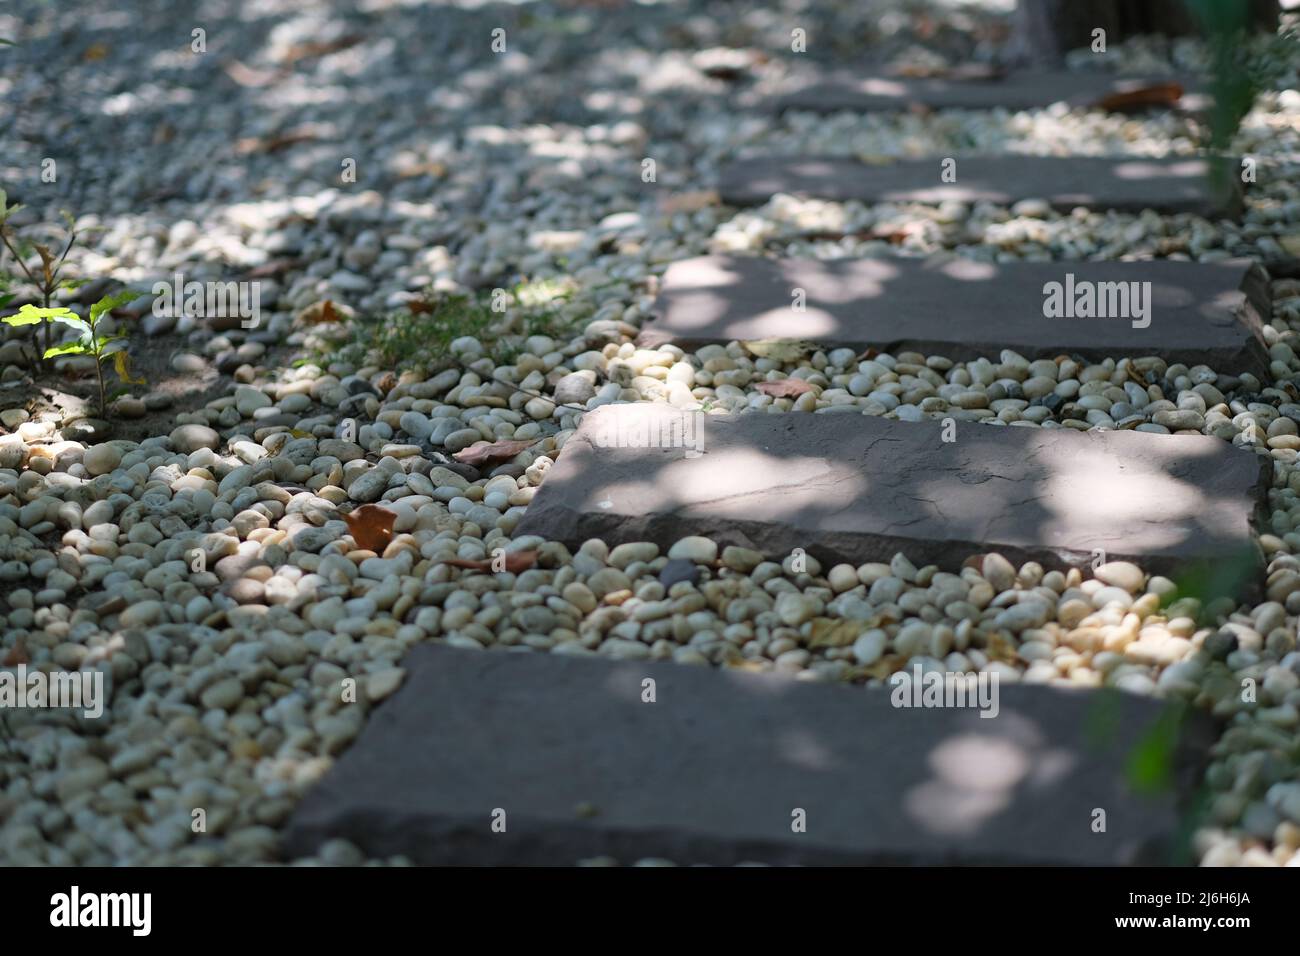 A walkway through garden made of neatly arranged stone tiles and a gravel Stock Photo